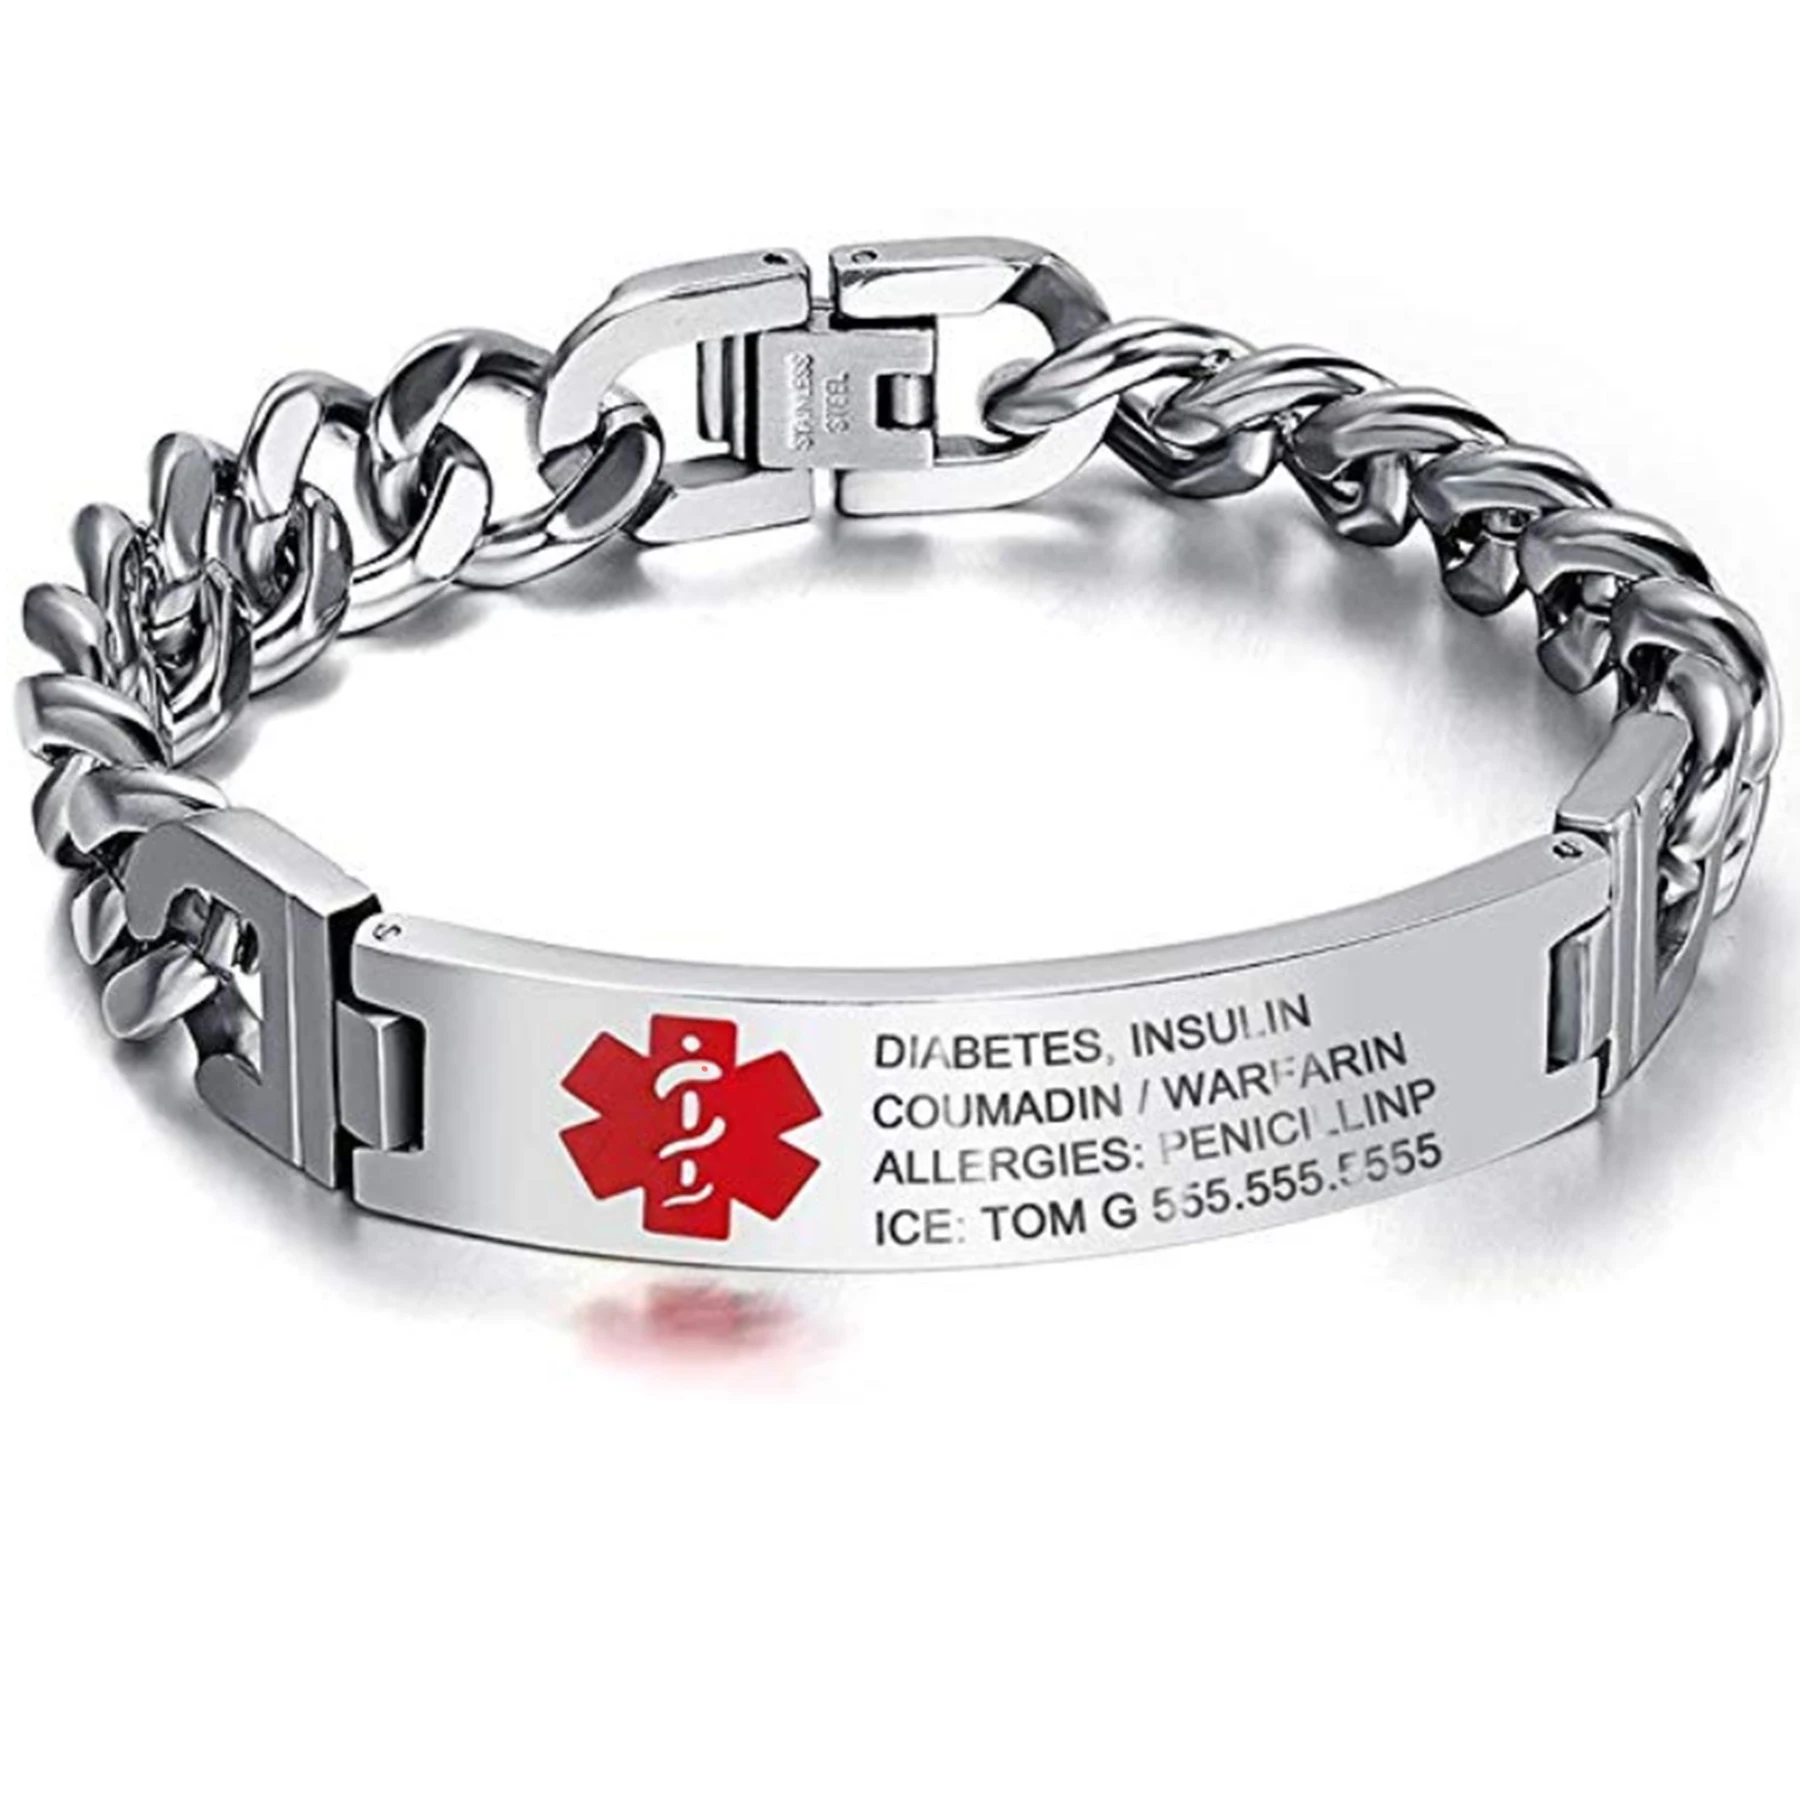 

Medical Alert ID Stainless Steel Bracelet DIABETES EPILEPSY ALZHEIMER'S ALLERGY SOS Jewelry Free Engraving